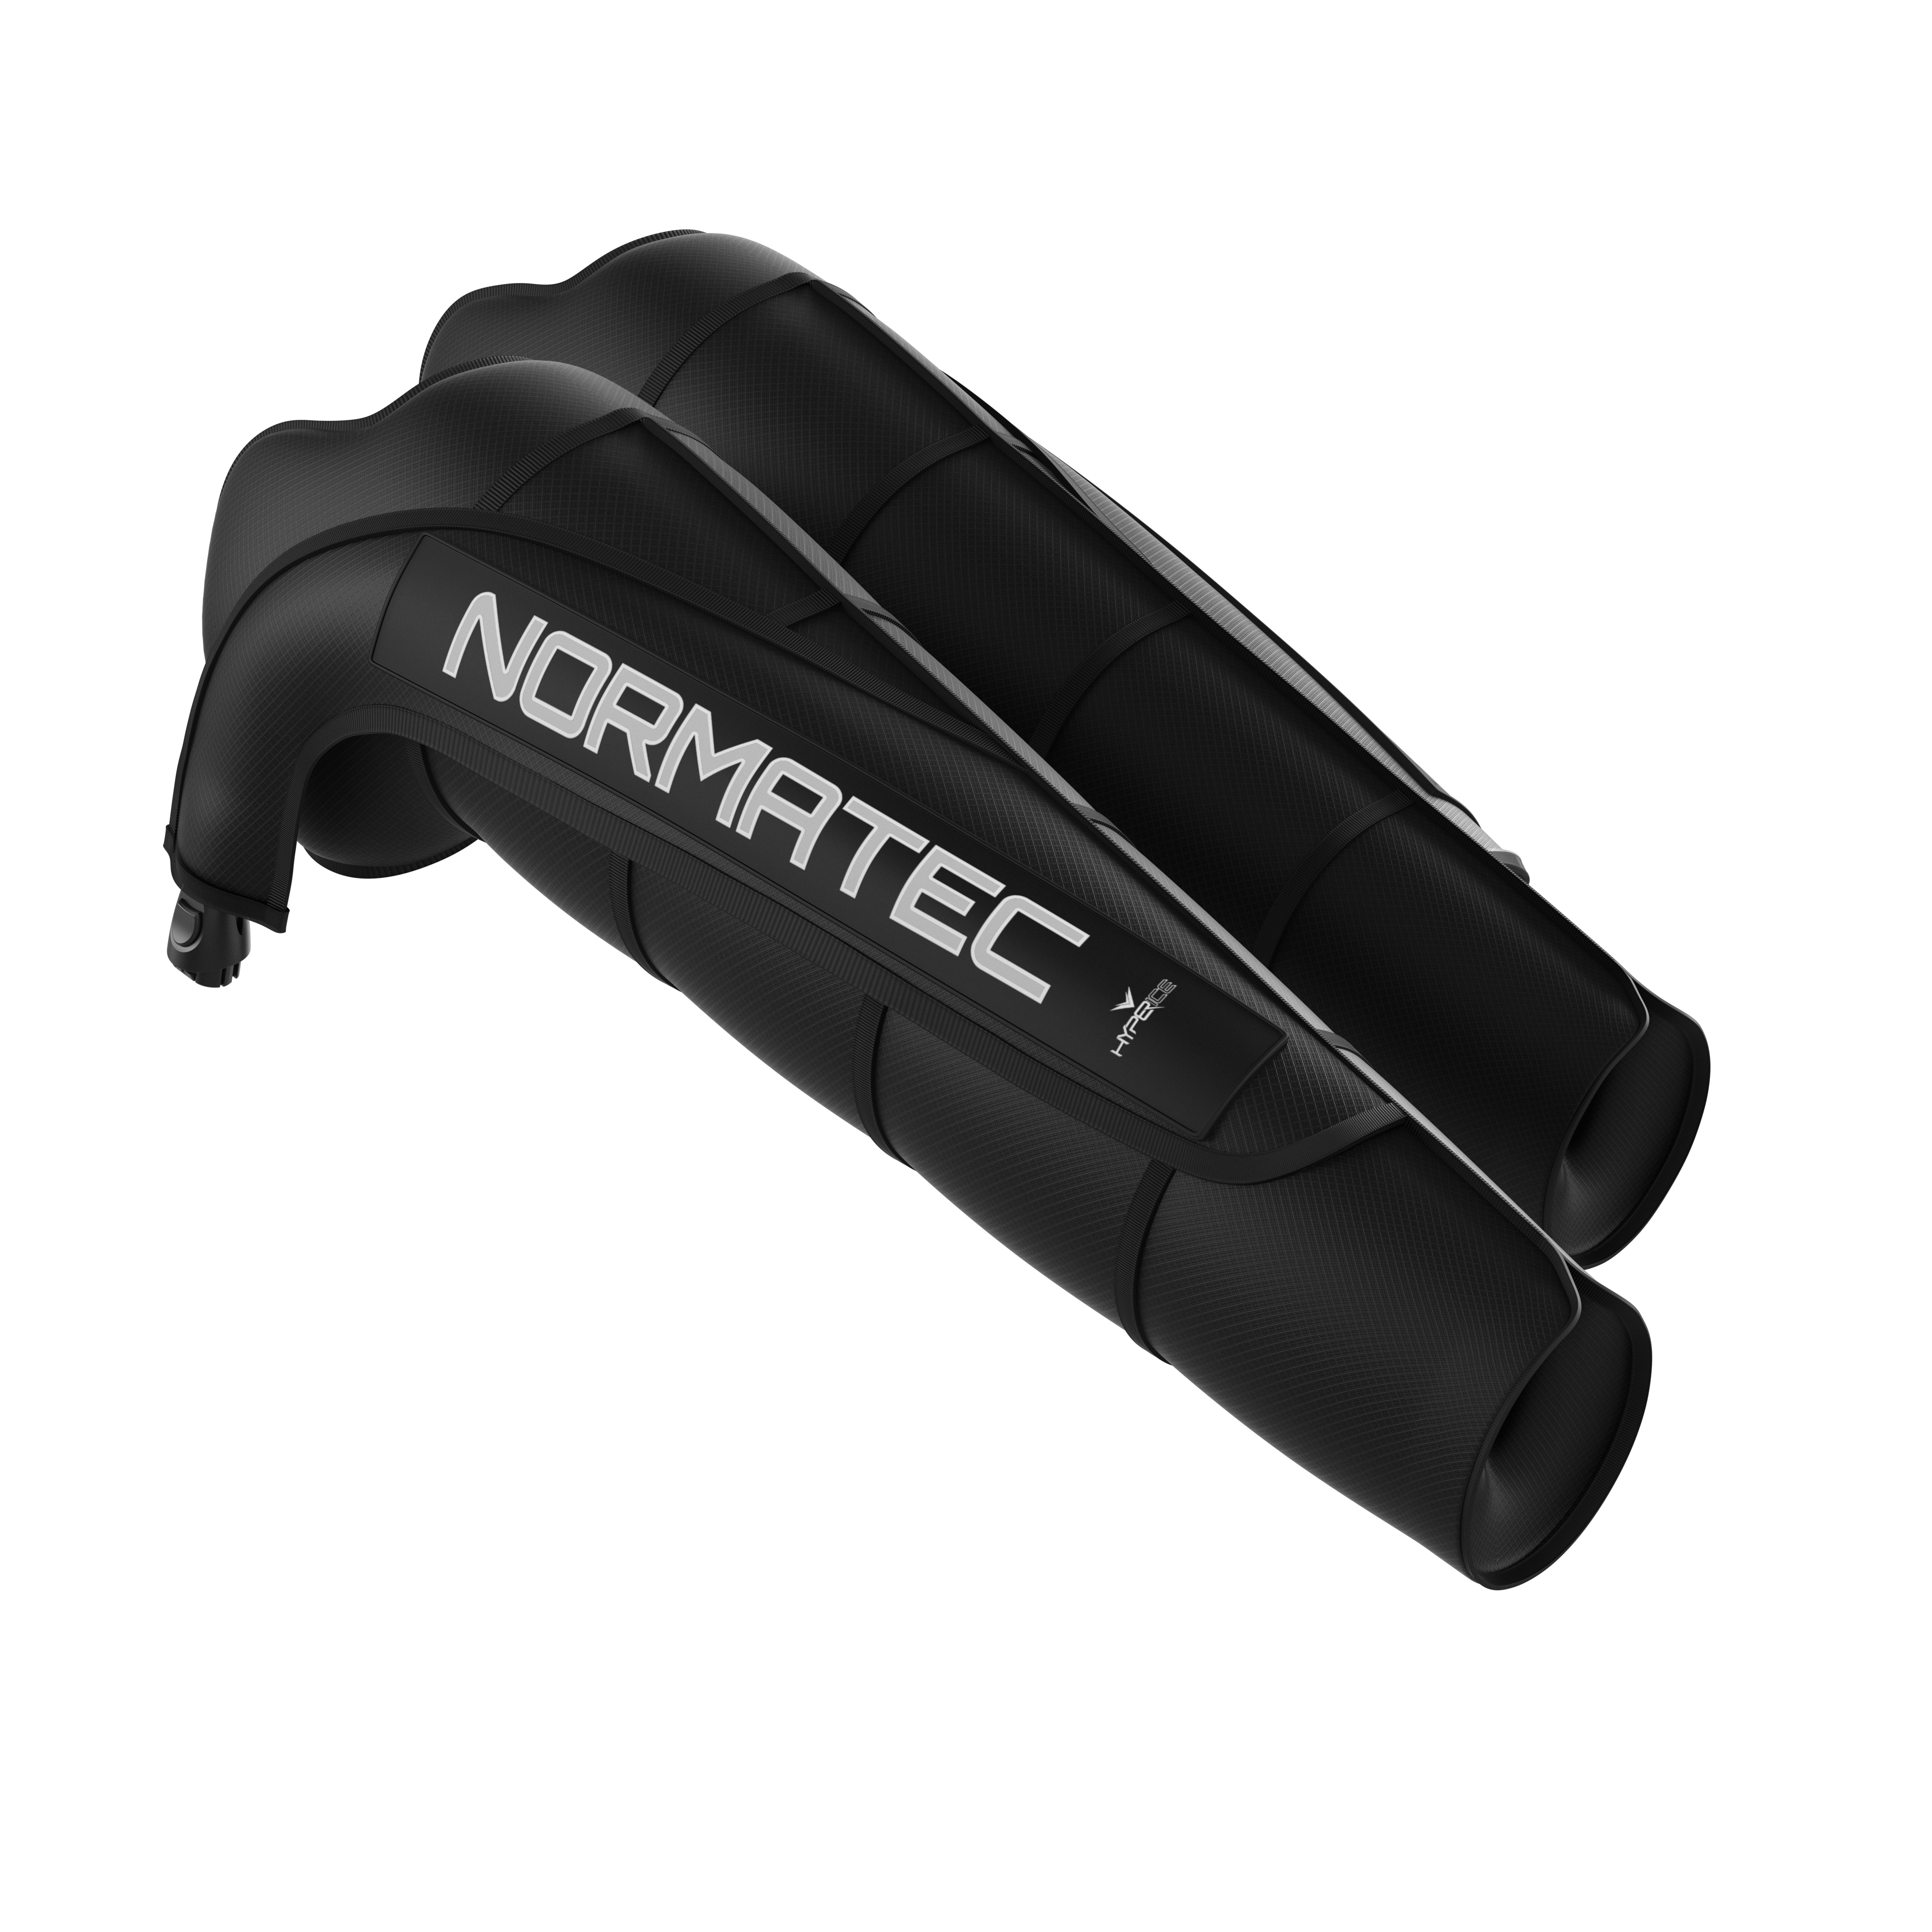 Hyperice Normatec Arm Attachment